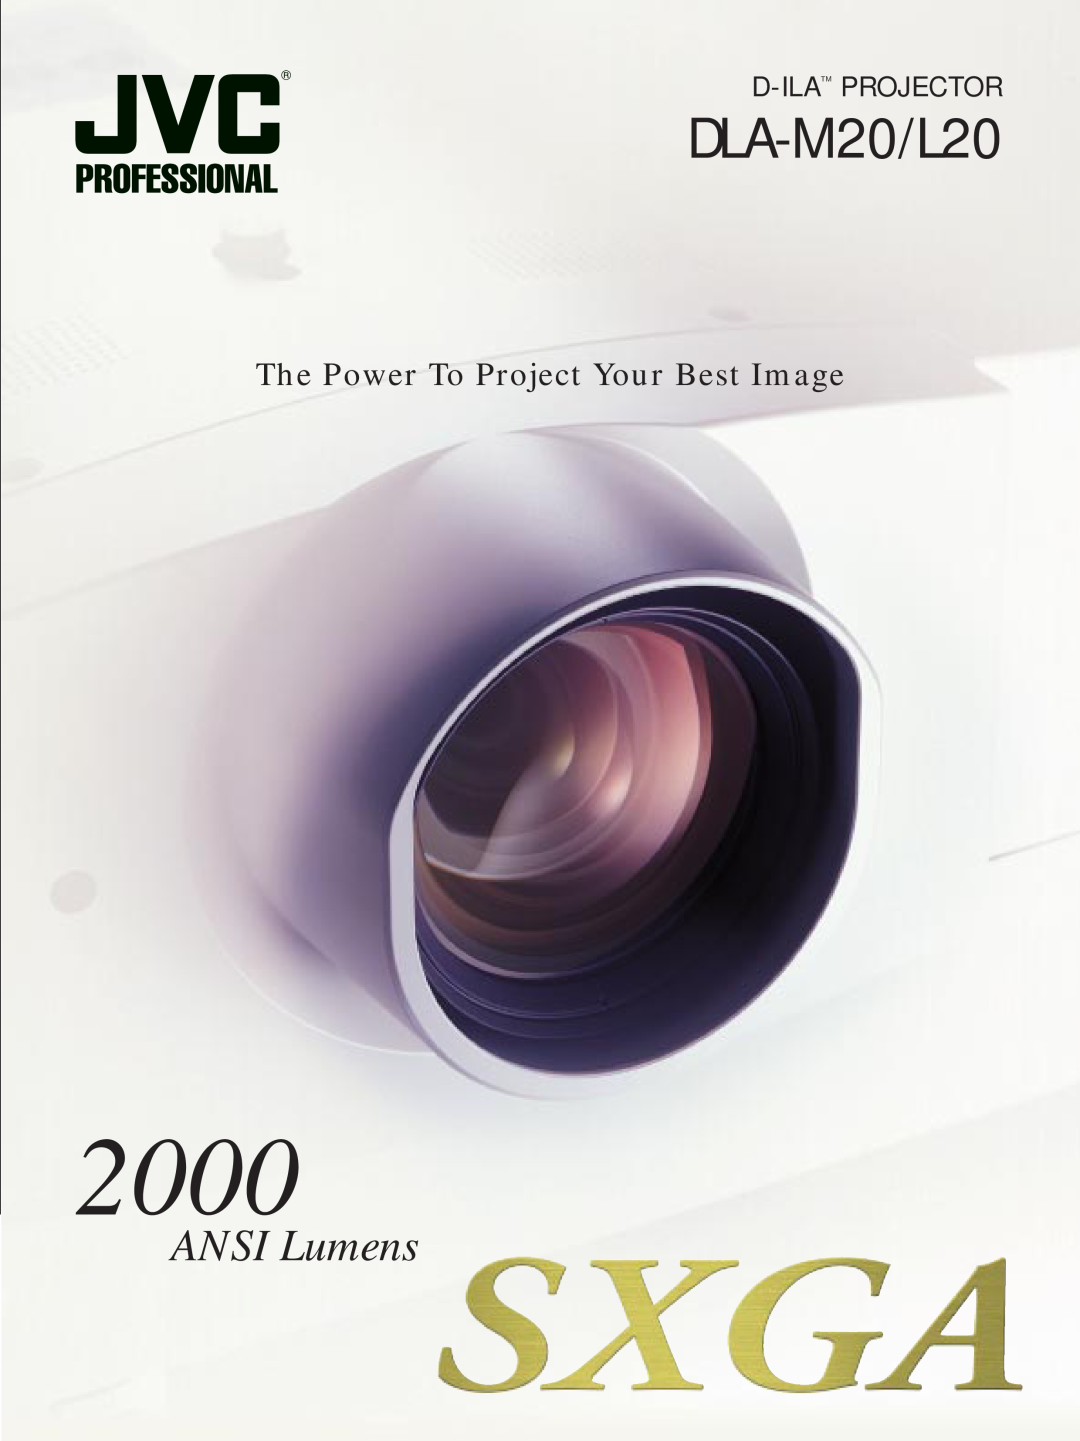 JVC DLA-L20 manual 2000, DLA-M20/L20, ANSI Lumens, The Power To Project Your Best Image, D-Ilatm Projector 